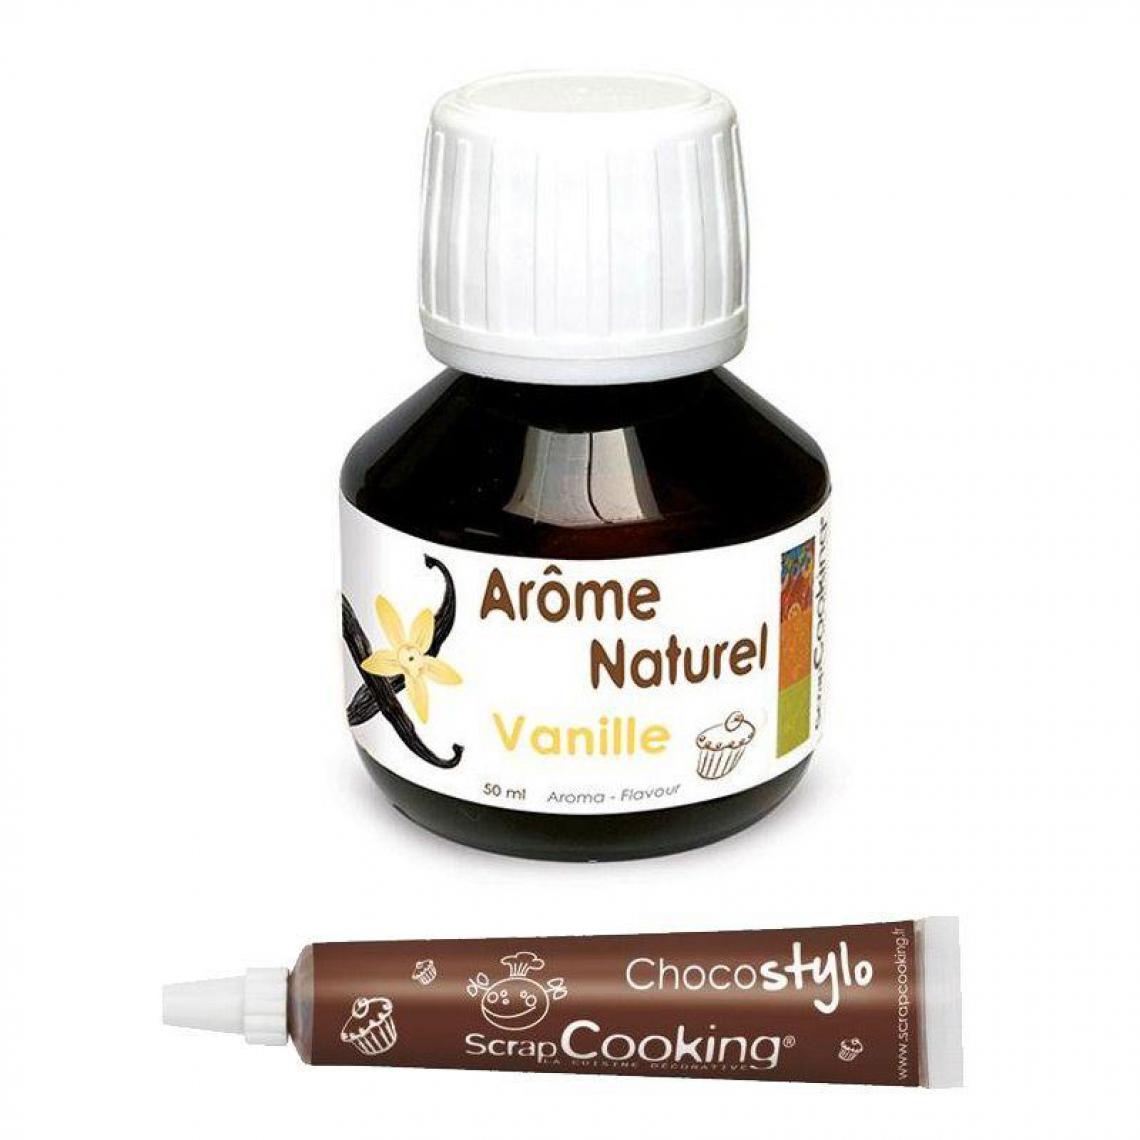 Scrapcooking - Arôme alimentaire naturel Vanille + Stylo chocolat - Kits créatifs